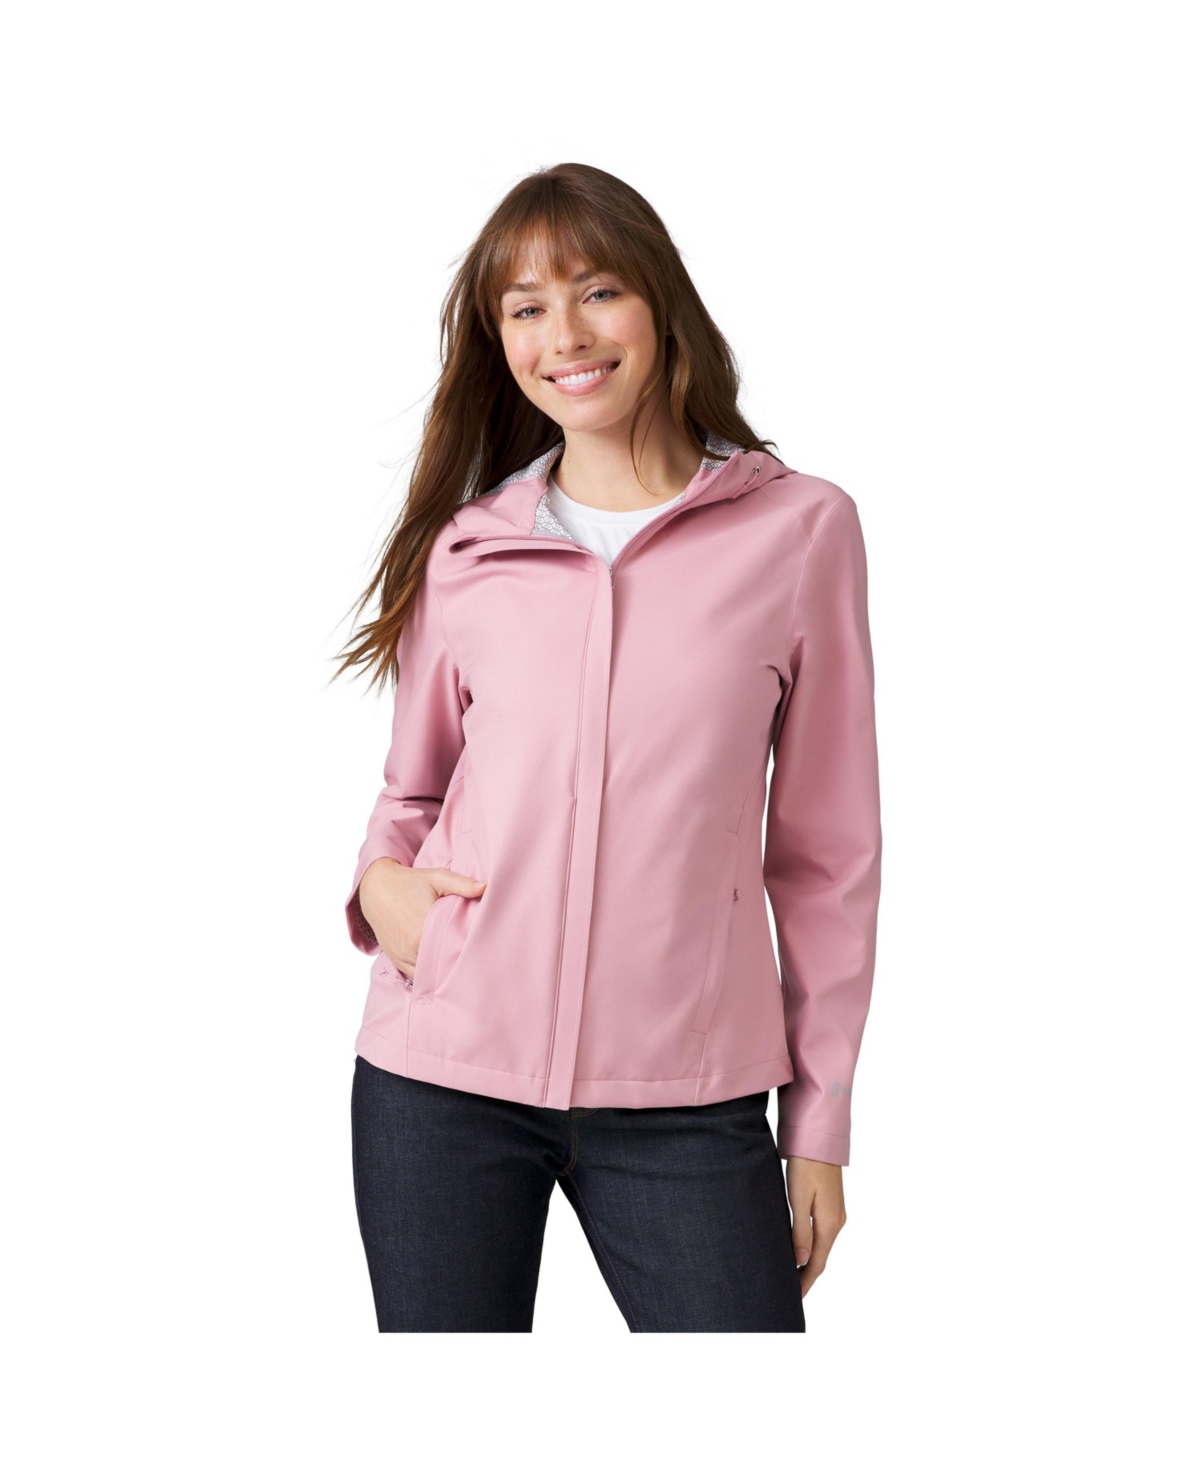 Women's X2O Packable Rain Jacket - Cameo pink